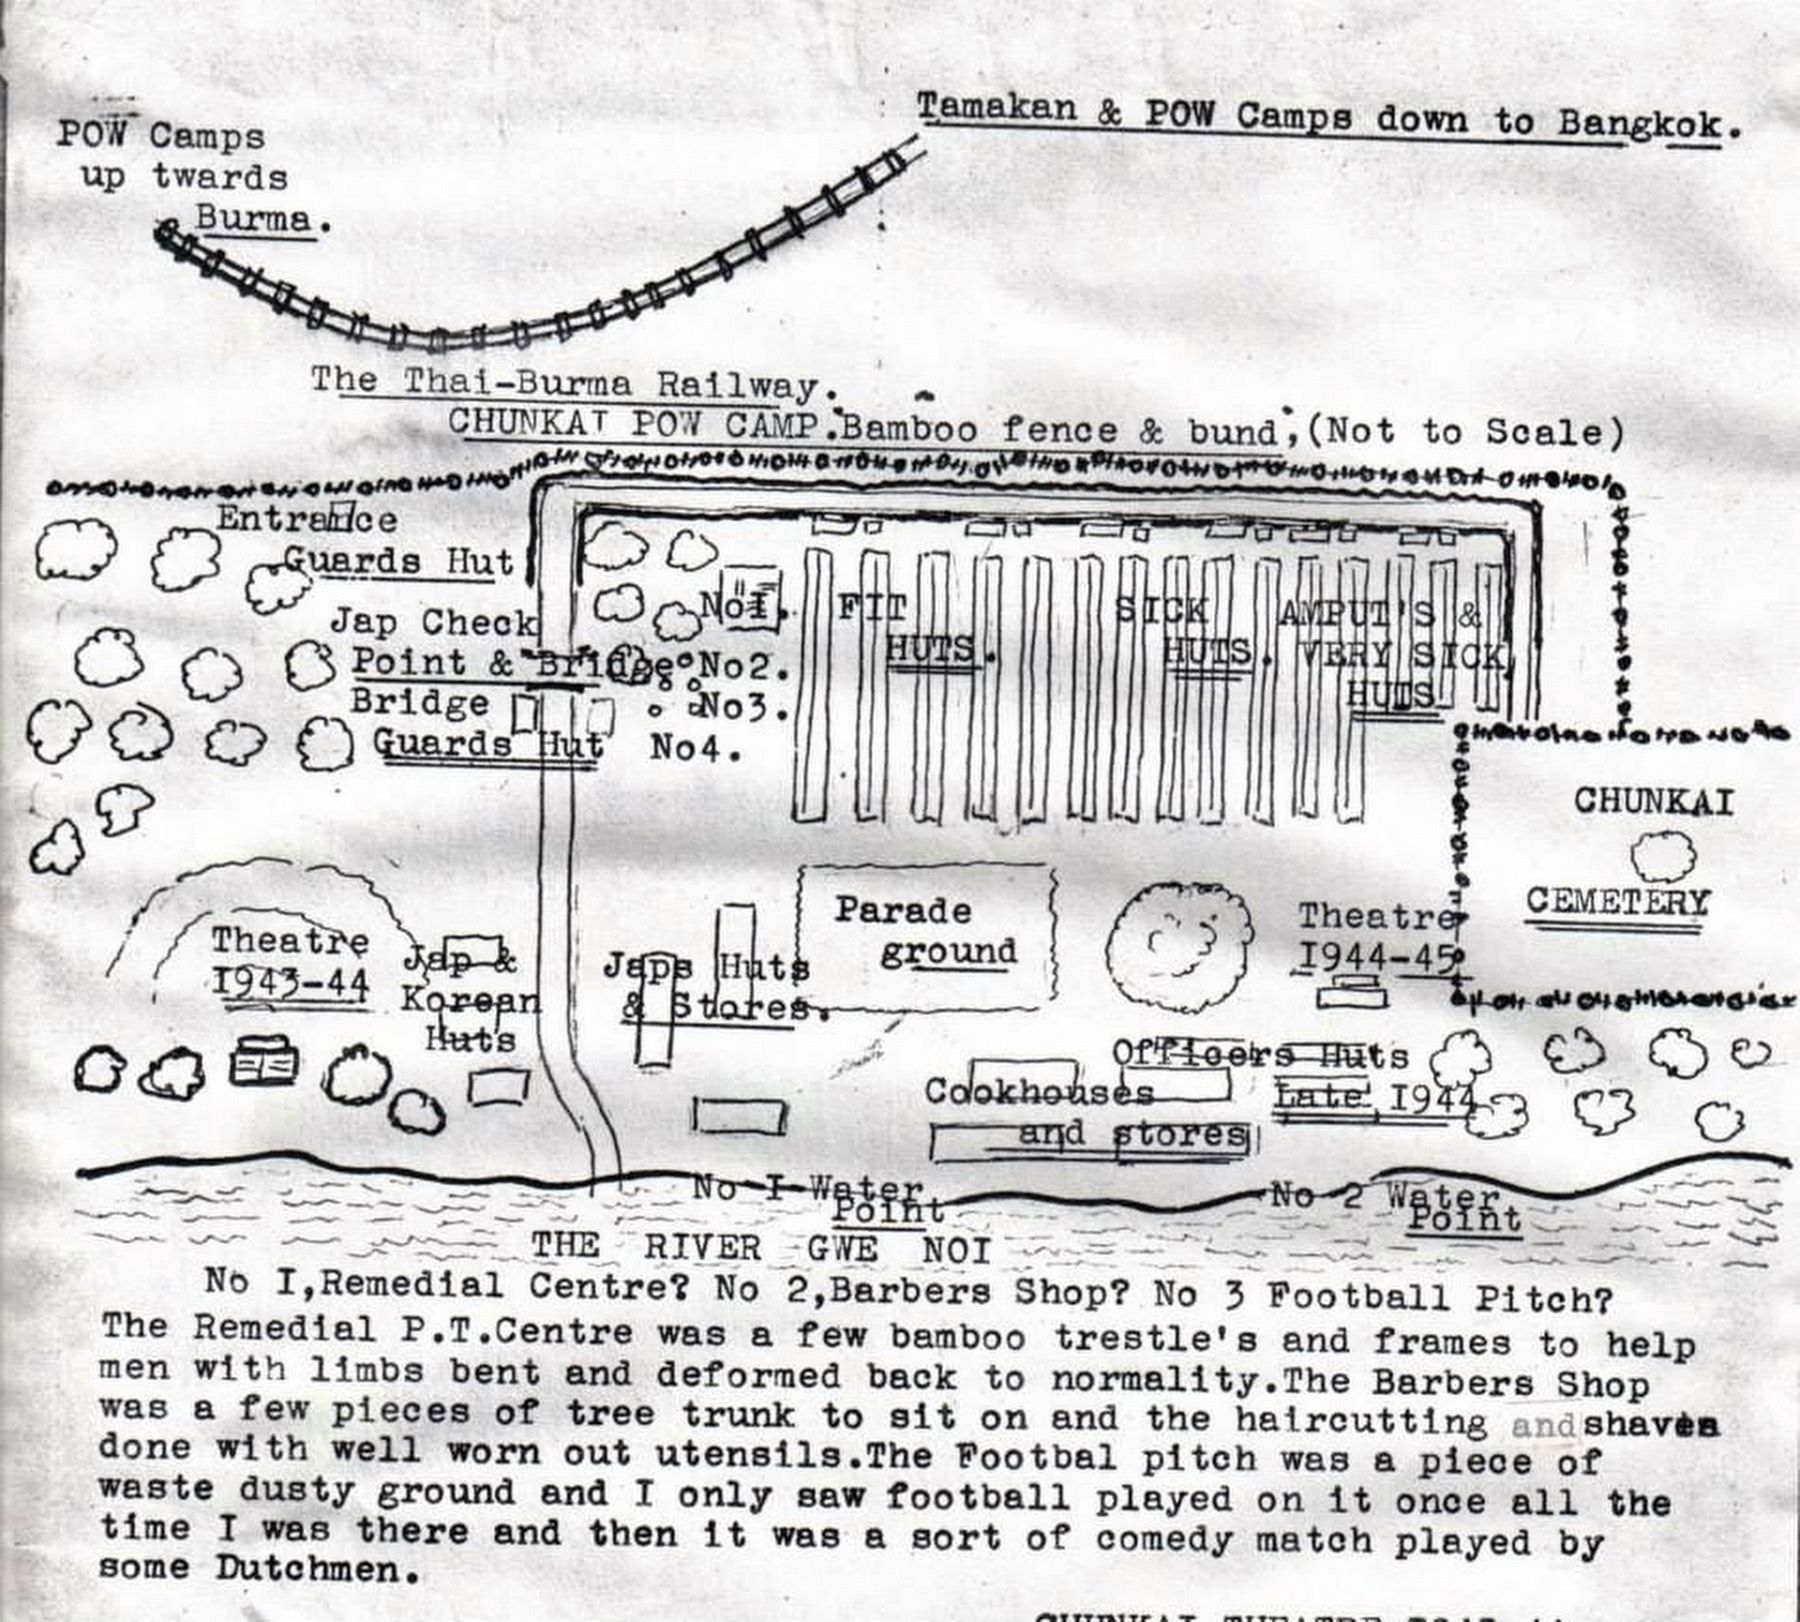 Chungkai POW Camp Diagram image. Click for full size.